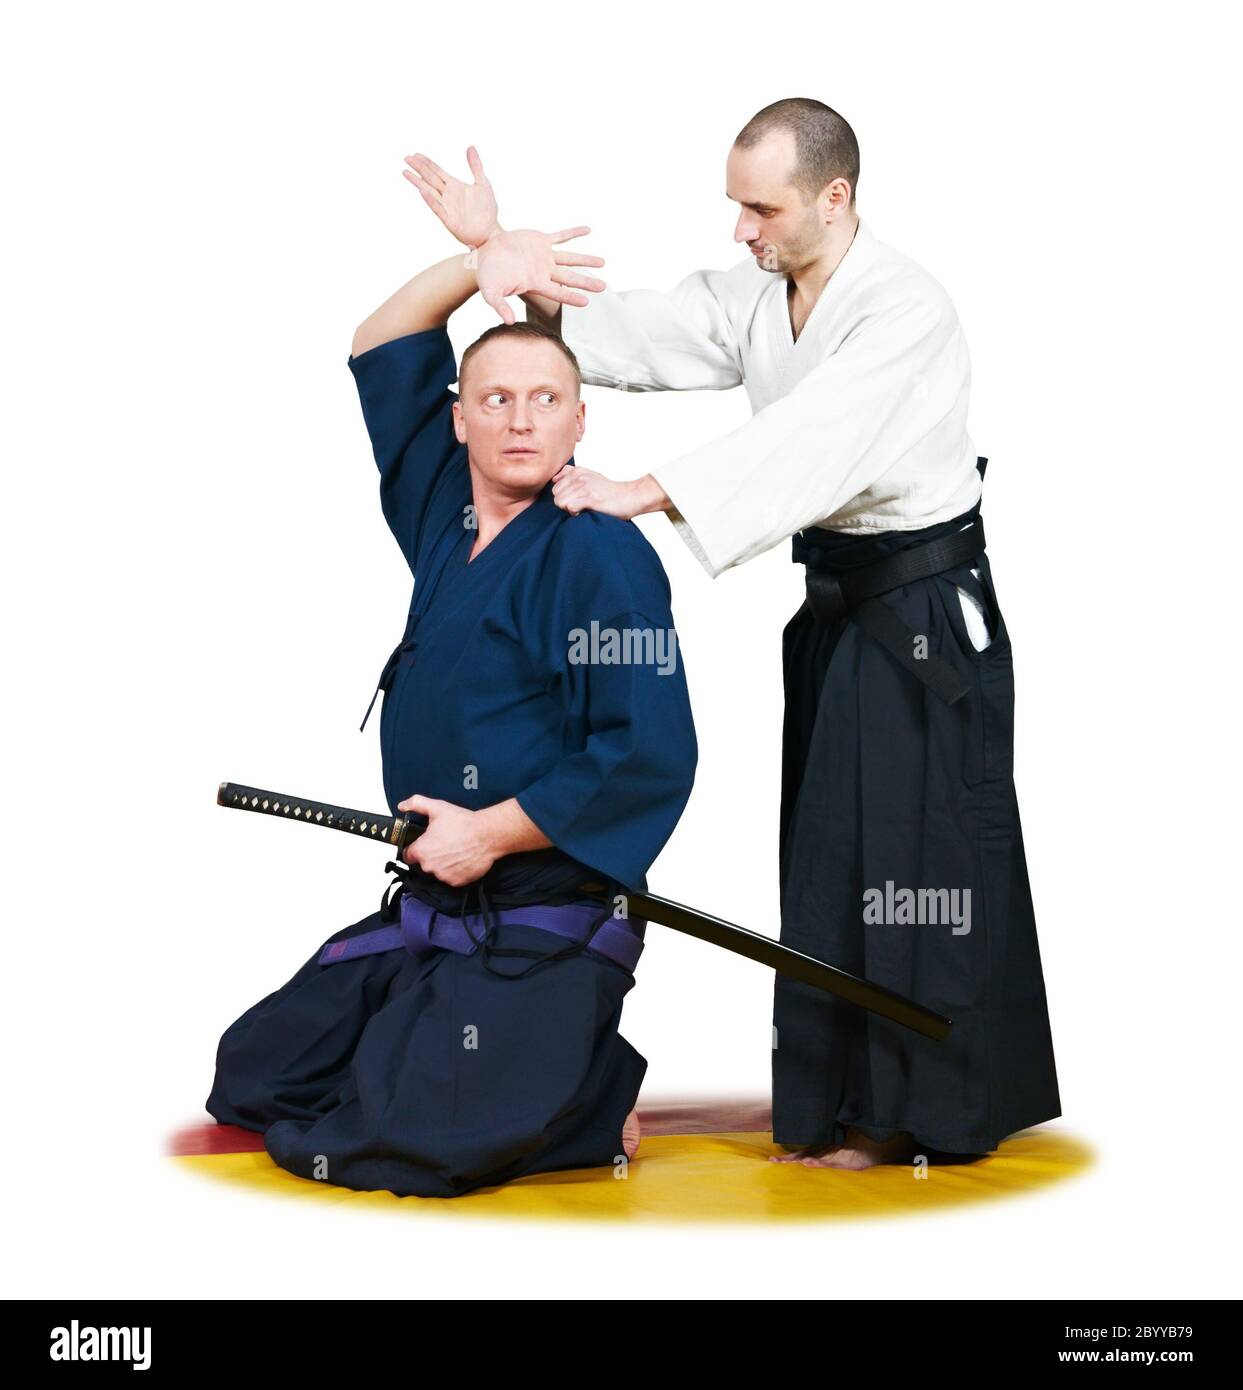 Deux combattants du jujitsu Banque D'Images